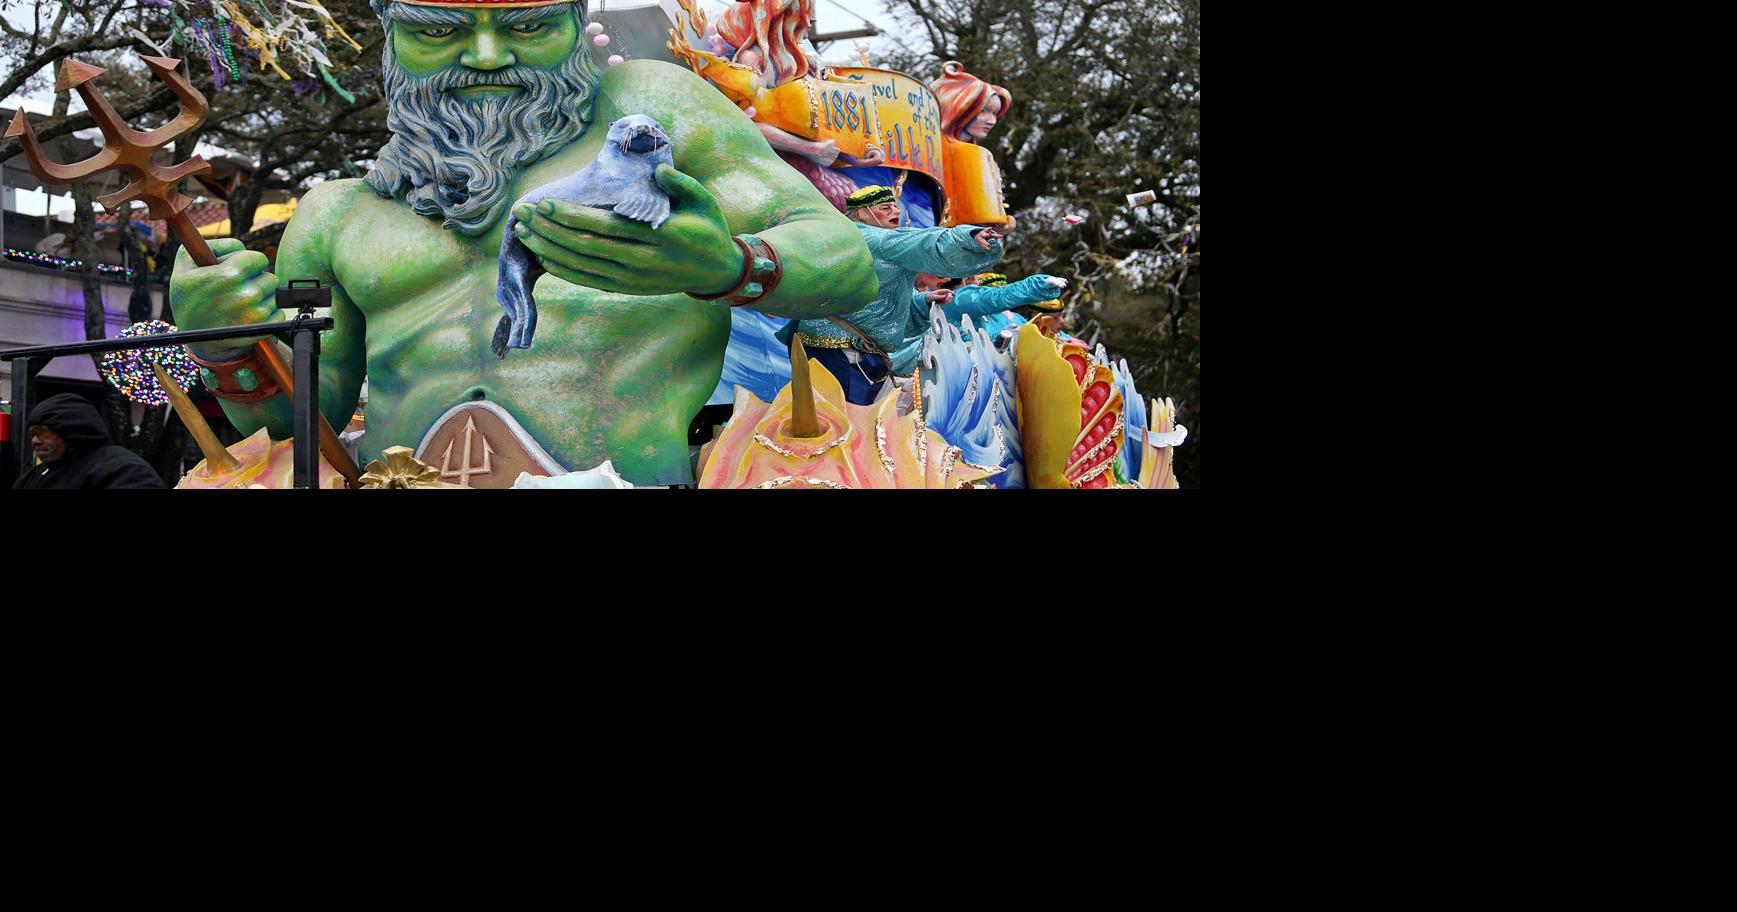 On Lundi Gras in New Orleans, Proteus, Orpheus parades span two